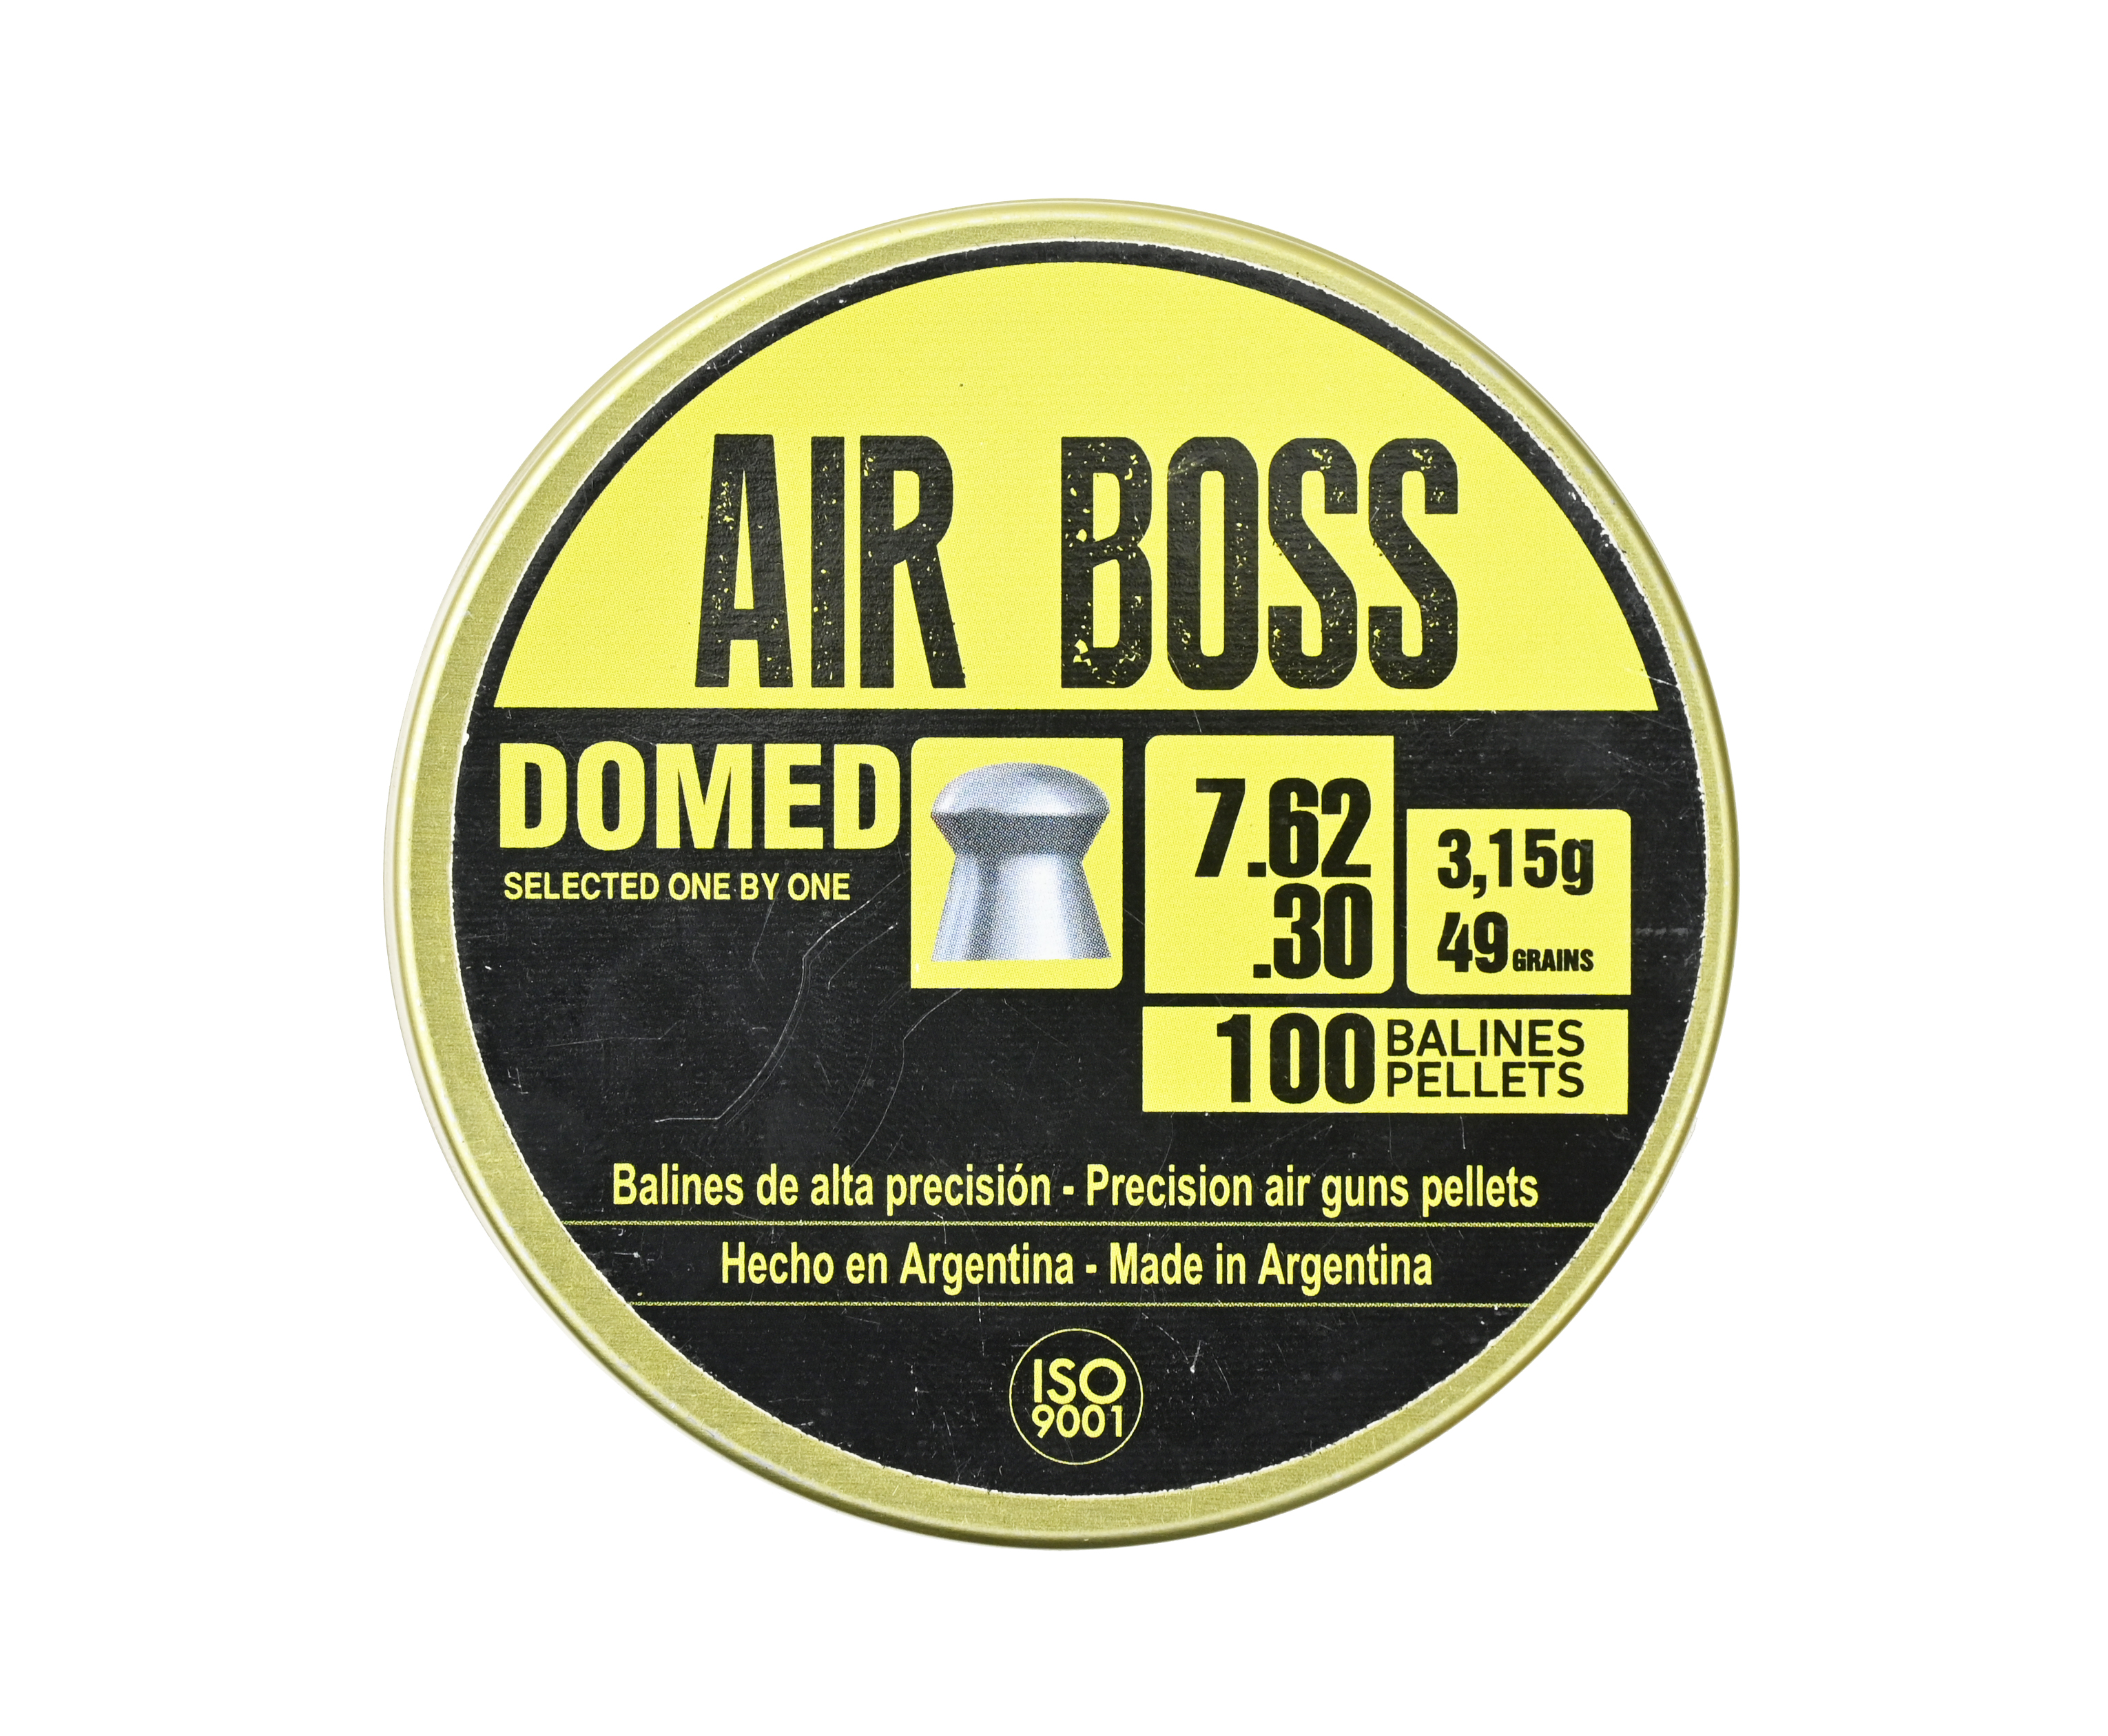  Apolo Air Boss Domed 7.62  (100 ) 3.15 